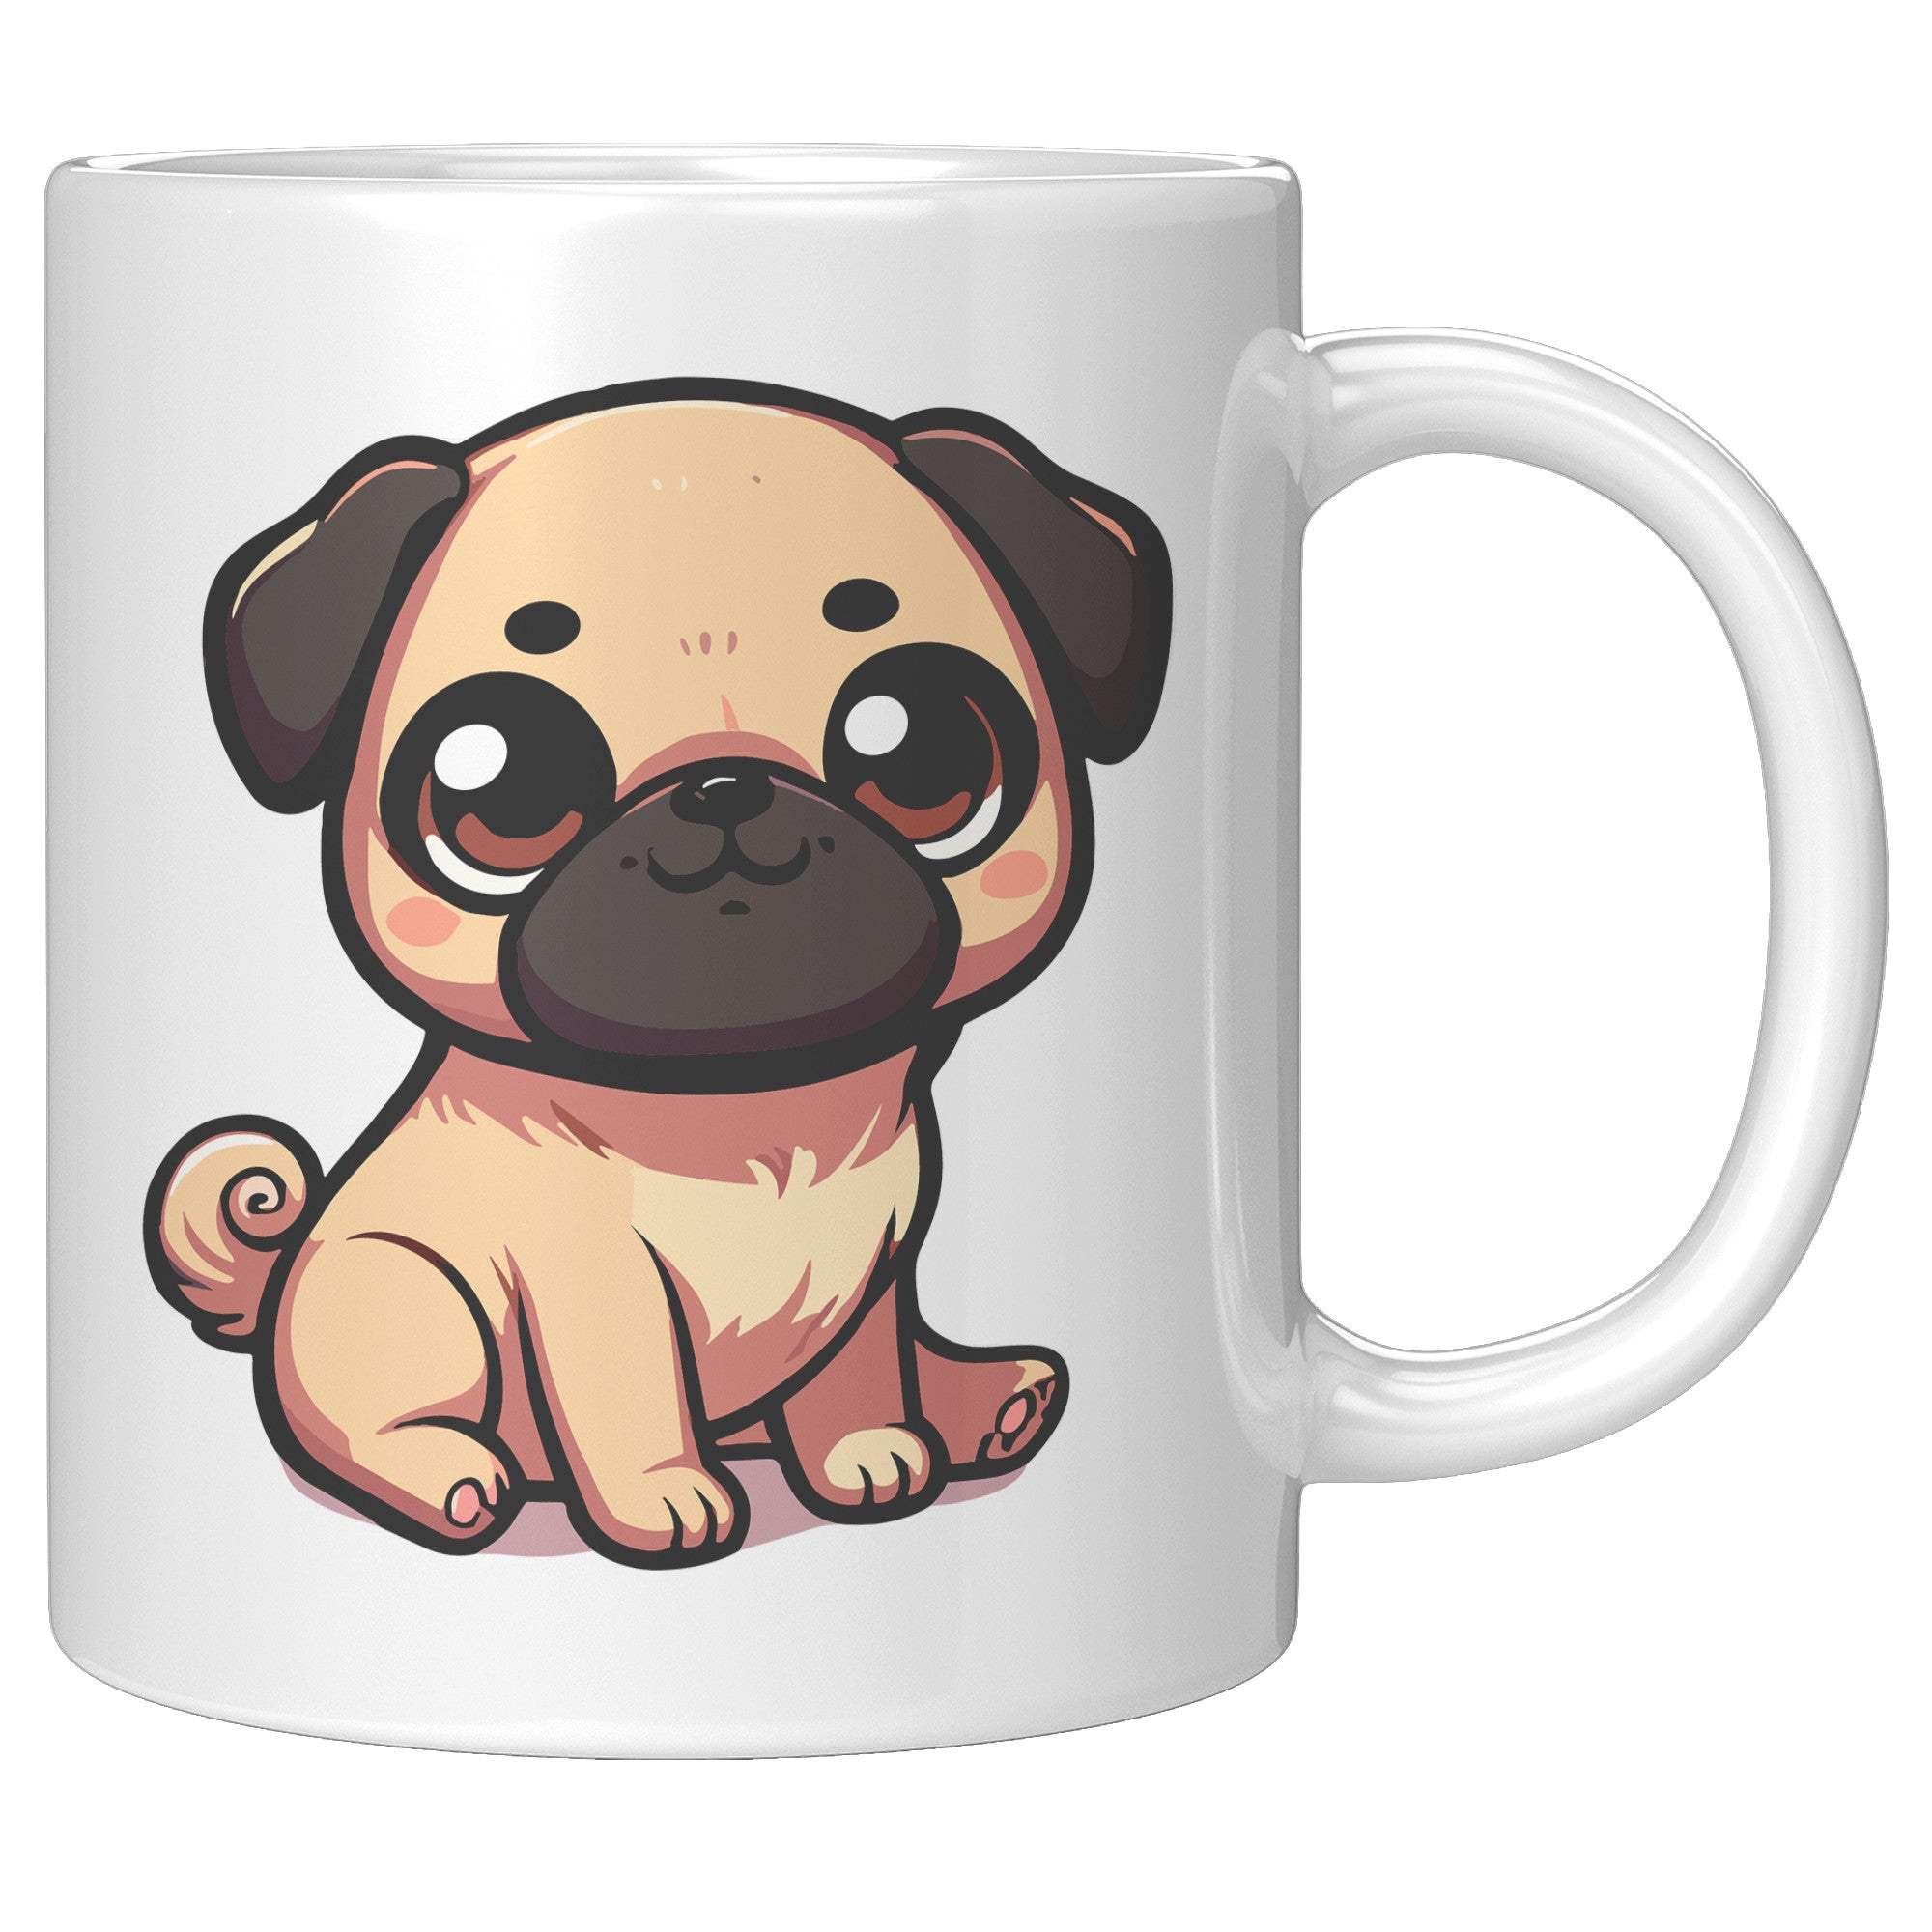 11oz Adorable Pug Cartoon Coffee Mug - Pug Lover Coffee Mug - Perfect Gift for Pug Owners - Cute Wrinkly Dog Coffee Mug" - U